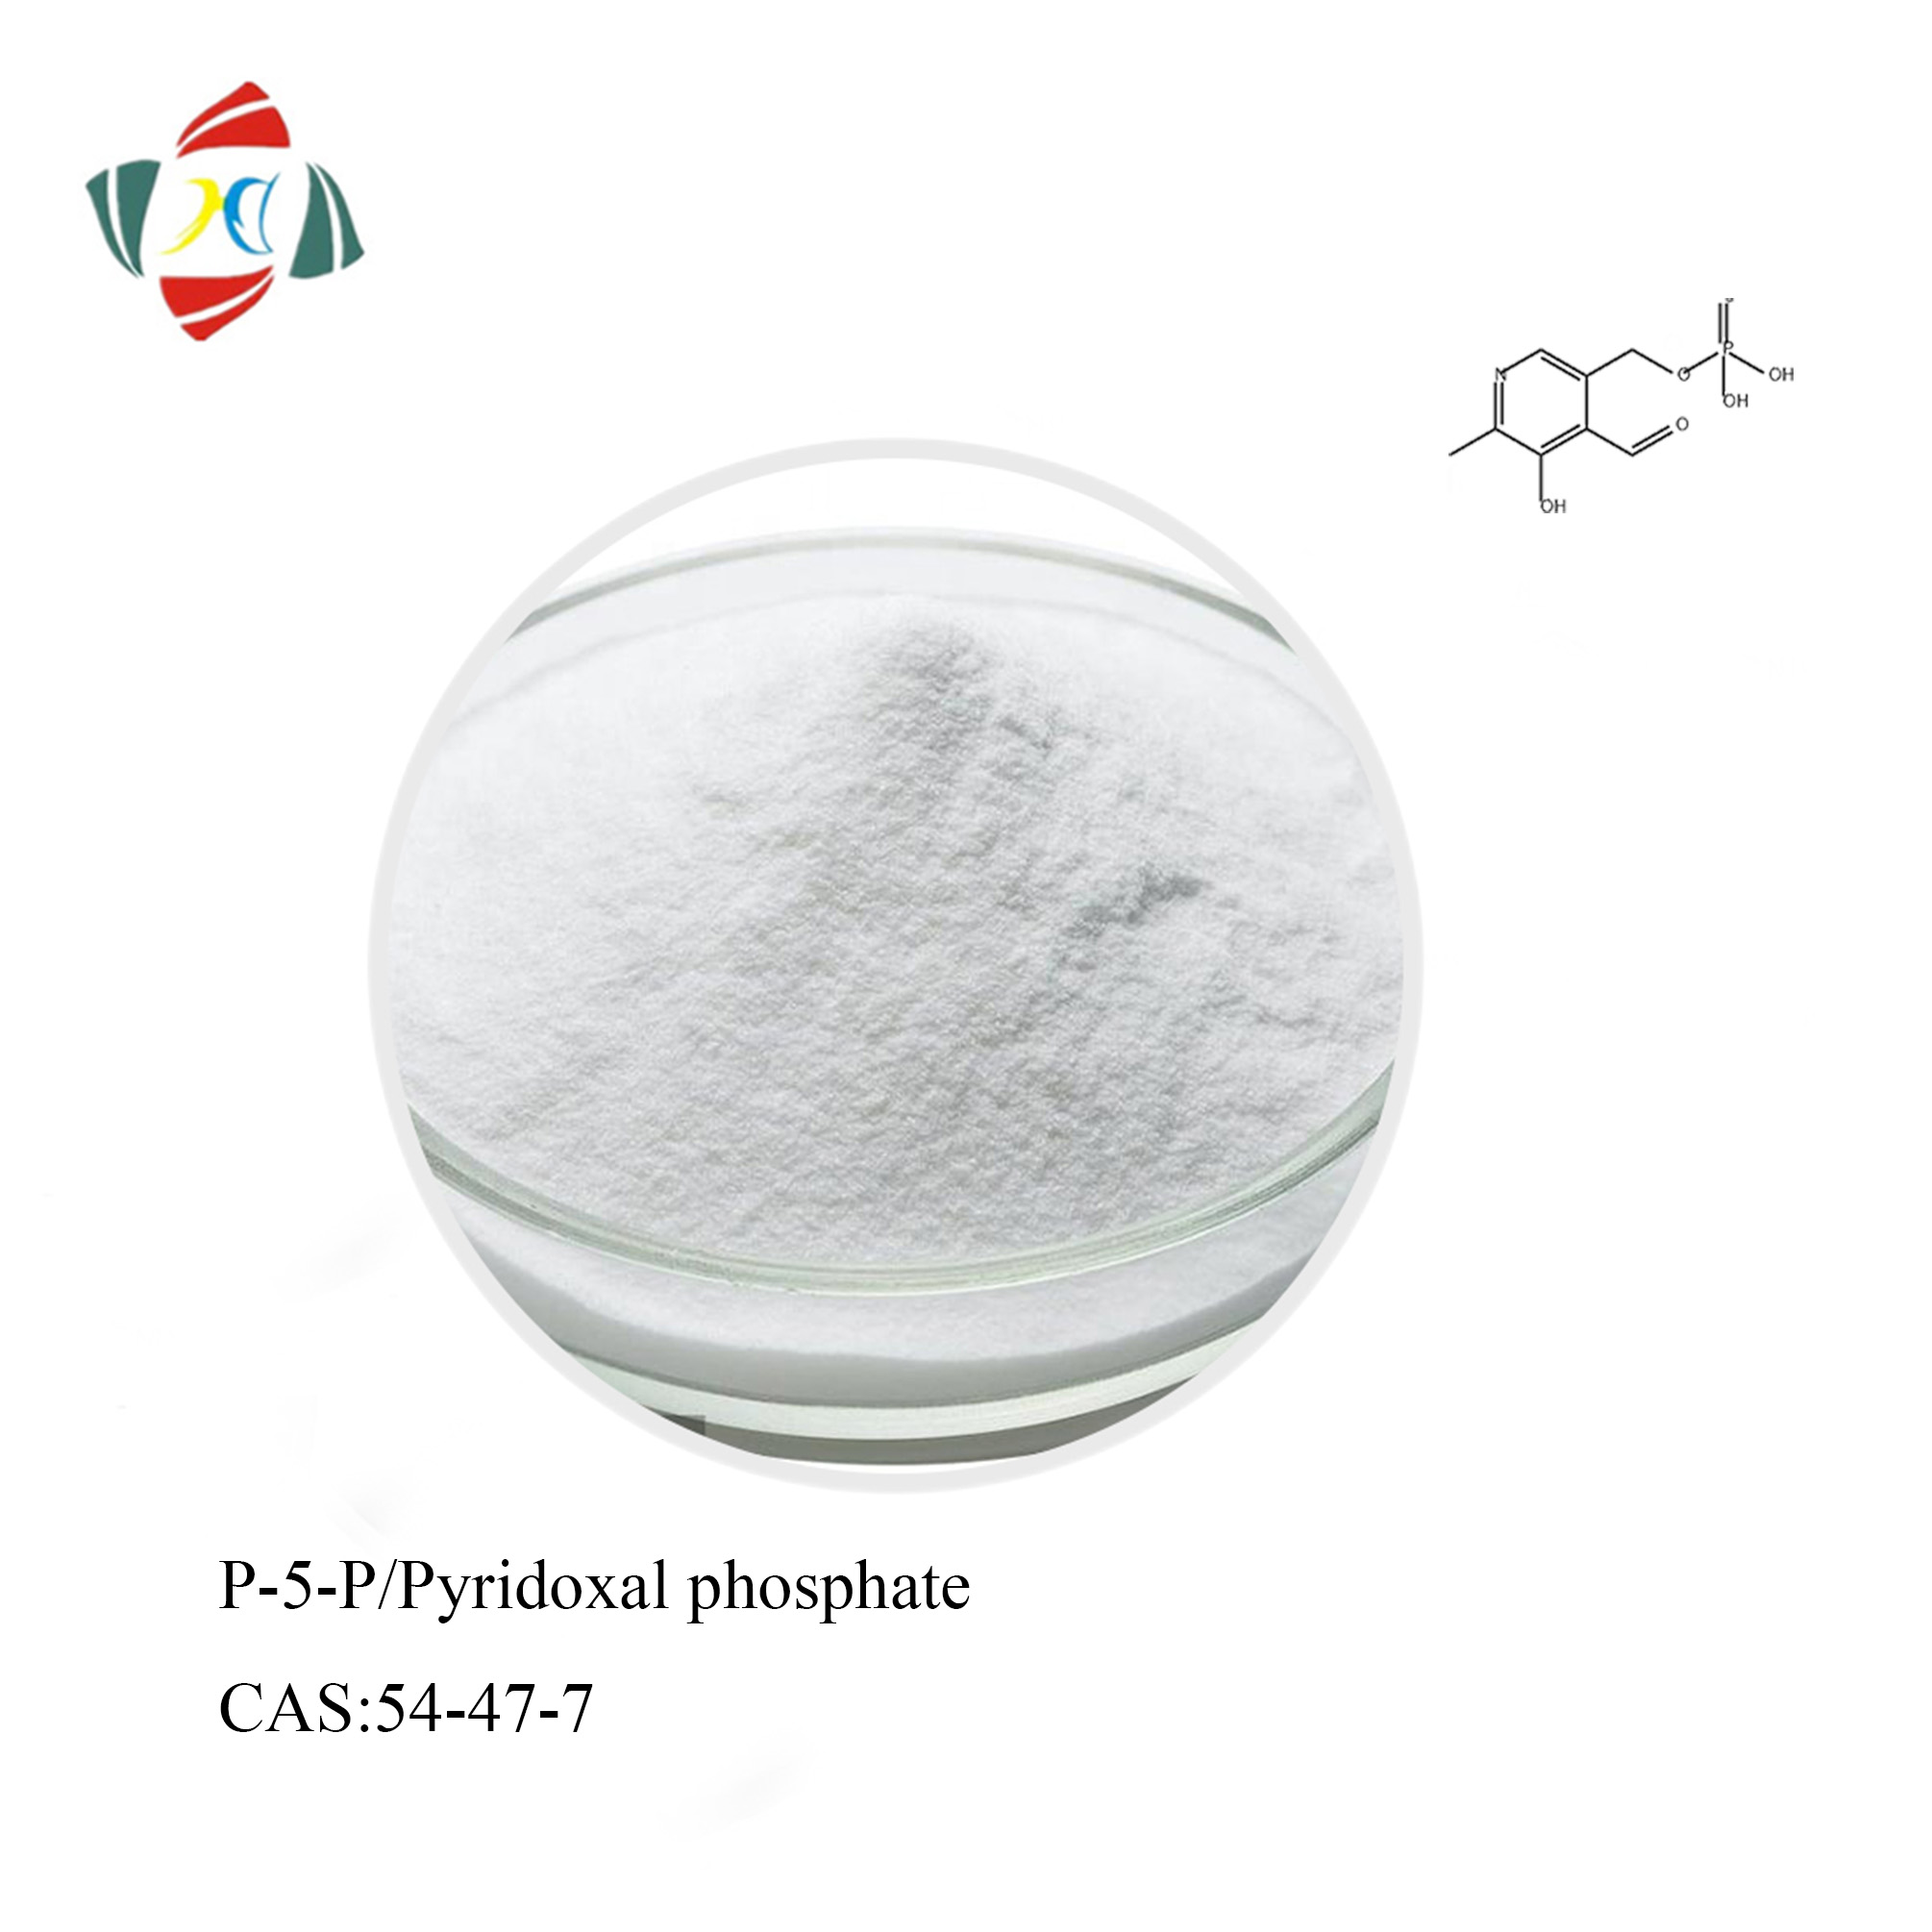 Kaufen Pyridoxal 5 Phosphat/Vitamin B6 CAS 54-47-7;Pyridoxal 5 Phosphat/Vitamin B6 CAS 54-47-7 Preis;Pyridoxal 5 Phosphat/Vitamin B6 CAS 54-47-7 Marken;Pyridoxal 5 Phosphat/Vitamin B6 CAS 54-47-7 Hersteller;Pyridoxal 5 Phosphat/Vitamin B6 CAS 54-47-7 Zitat;Pyridoxal 5 Phosphat/Vitamin B6 CAS 54-47-7 Unternehmen